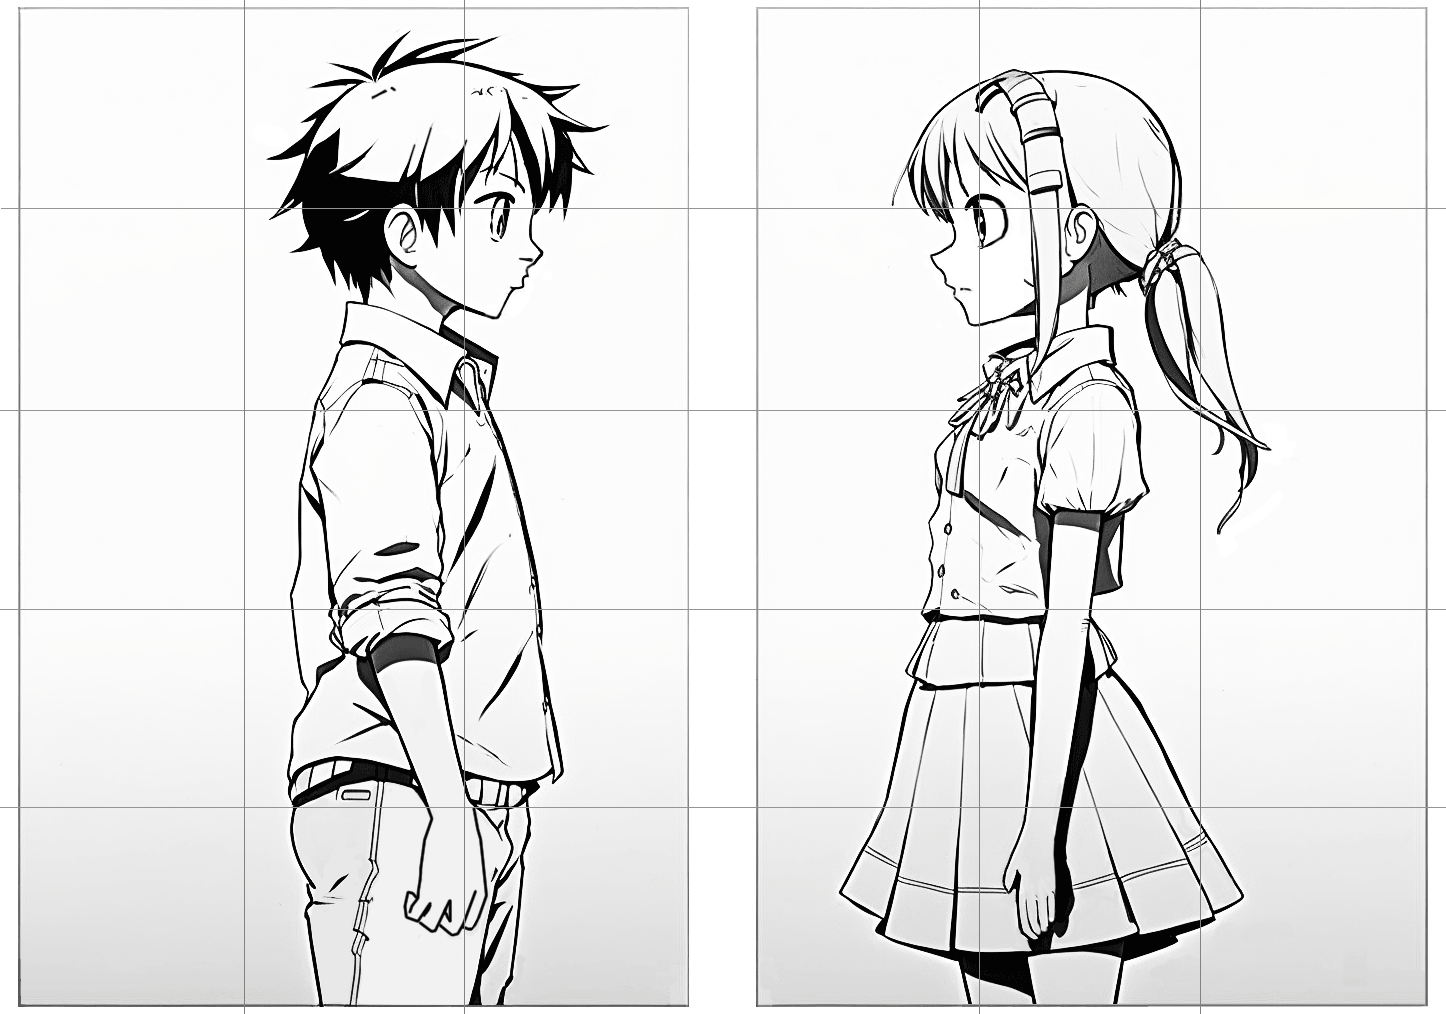 Plantilla para hacer dibujos manga. Dibujo de chico y chica estilo Manga.